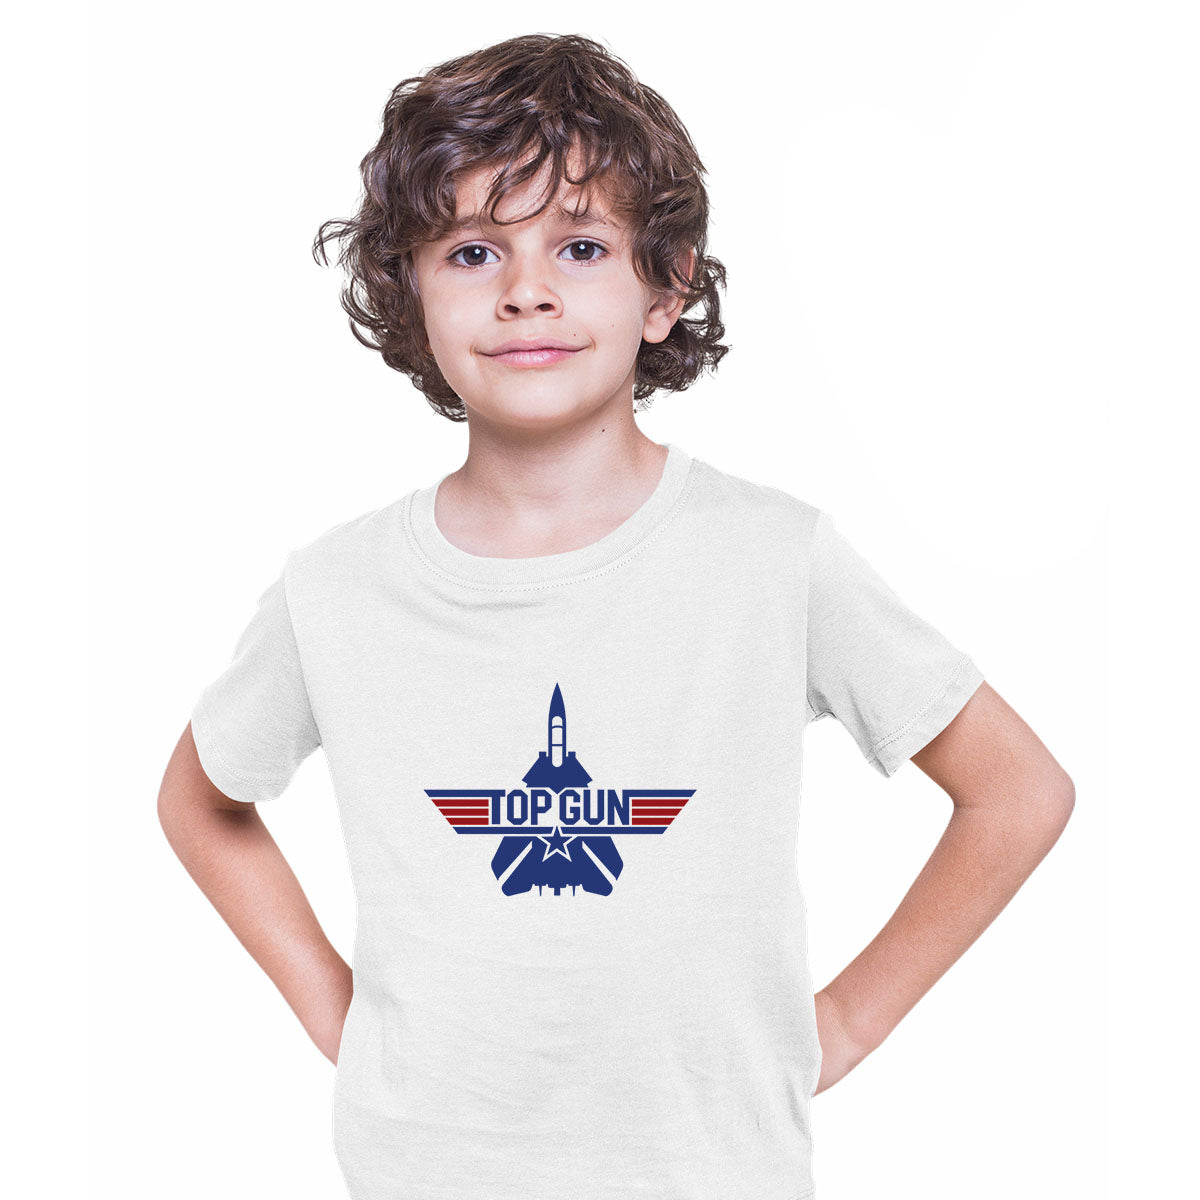 Top Gun Nostalgia T-shirt Tom Cruise Maverick T-shirt for Kids